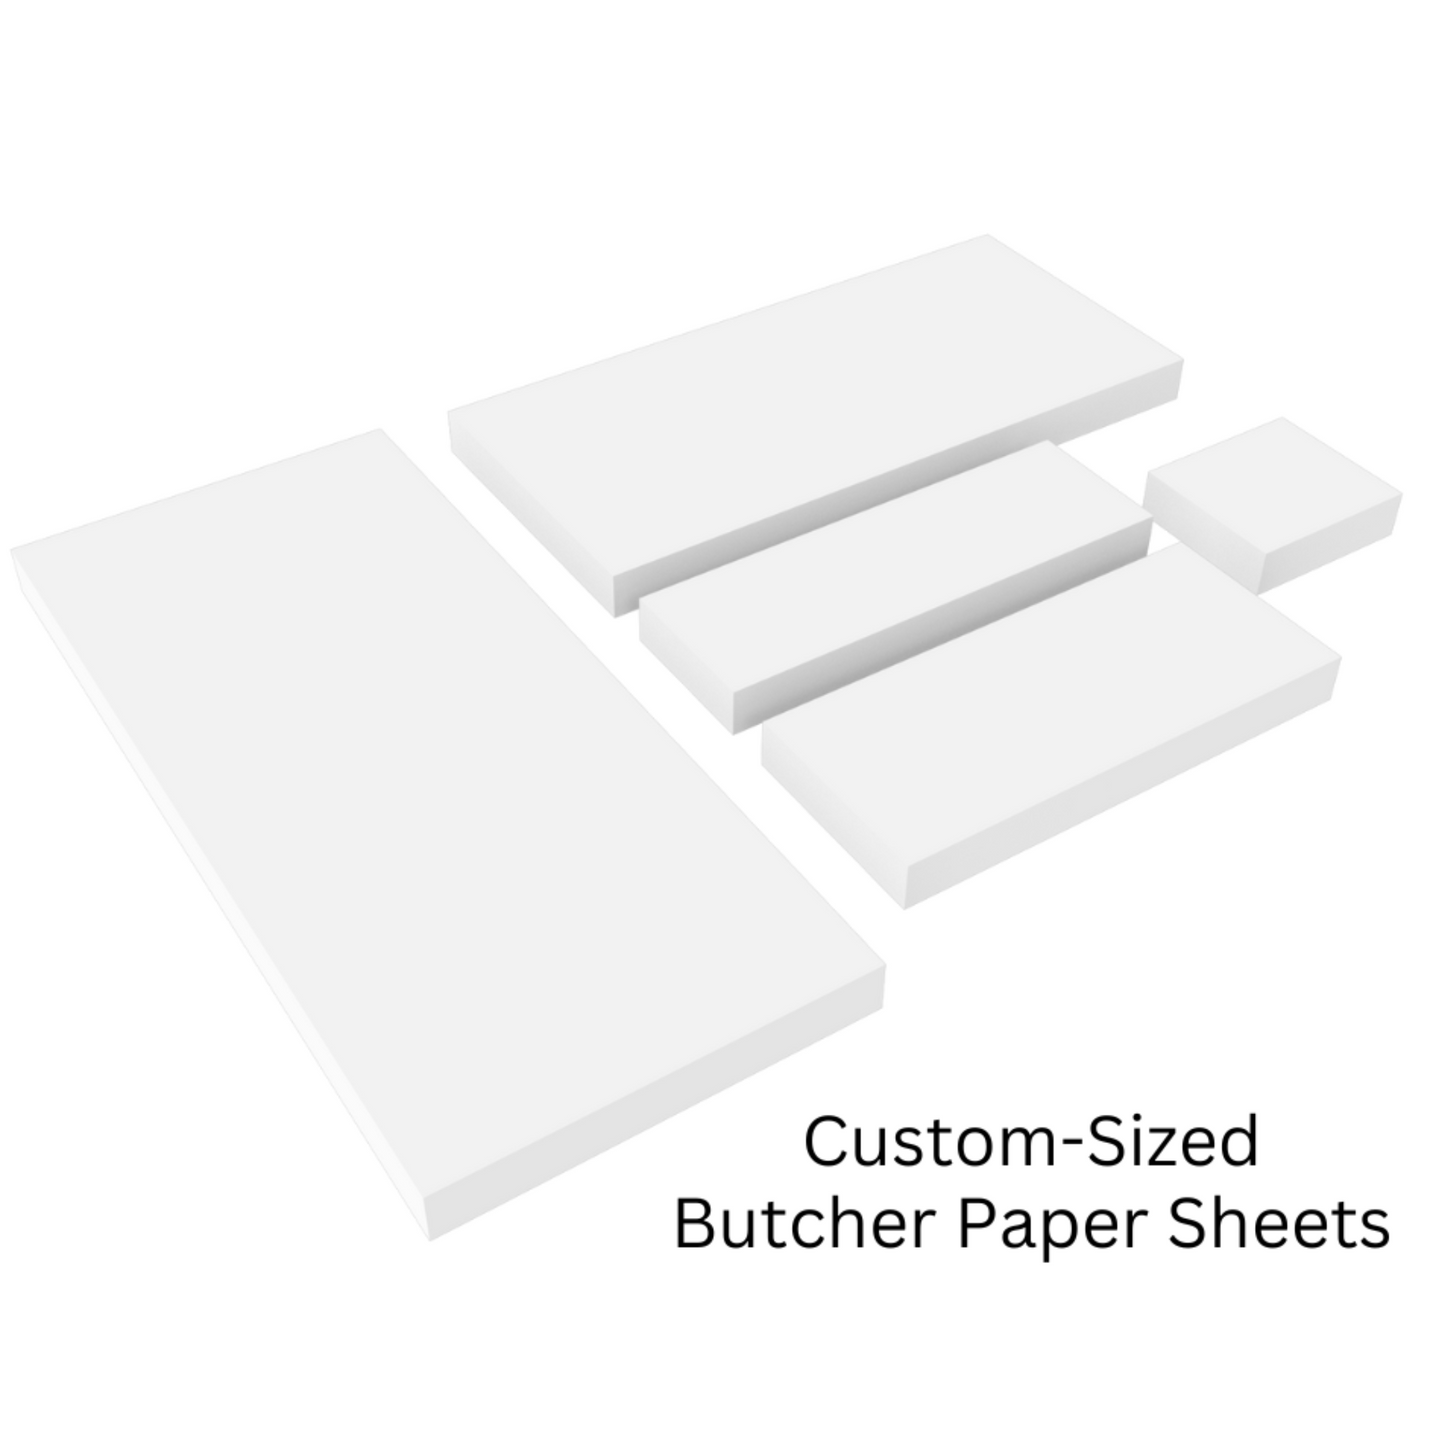 MSC 18X24 WHT BUTCHER PAPER SHEET, Quantity: Each of 1